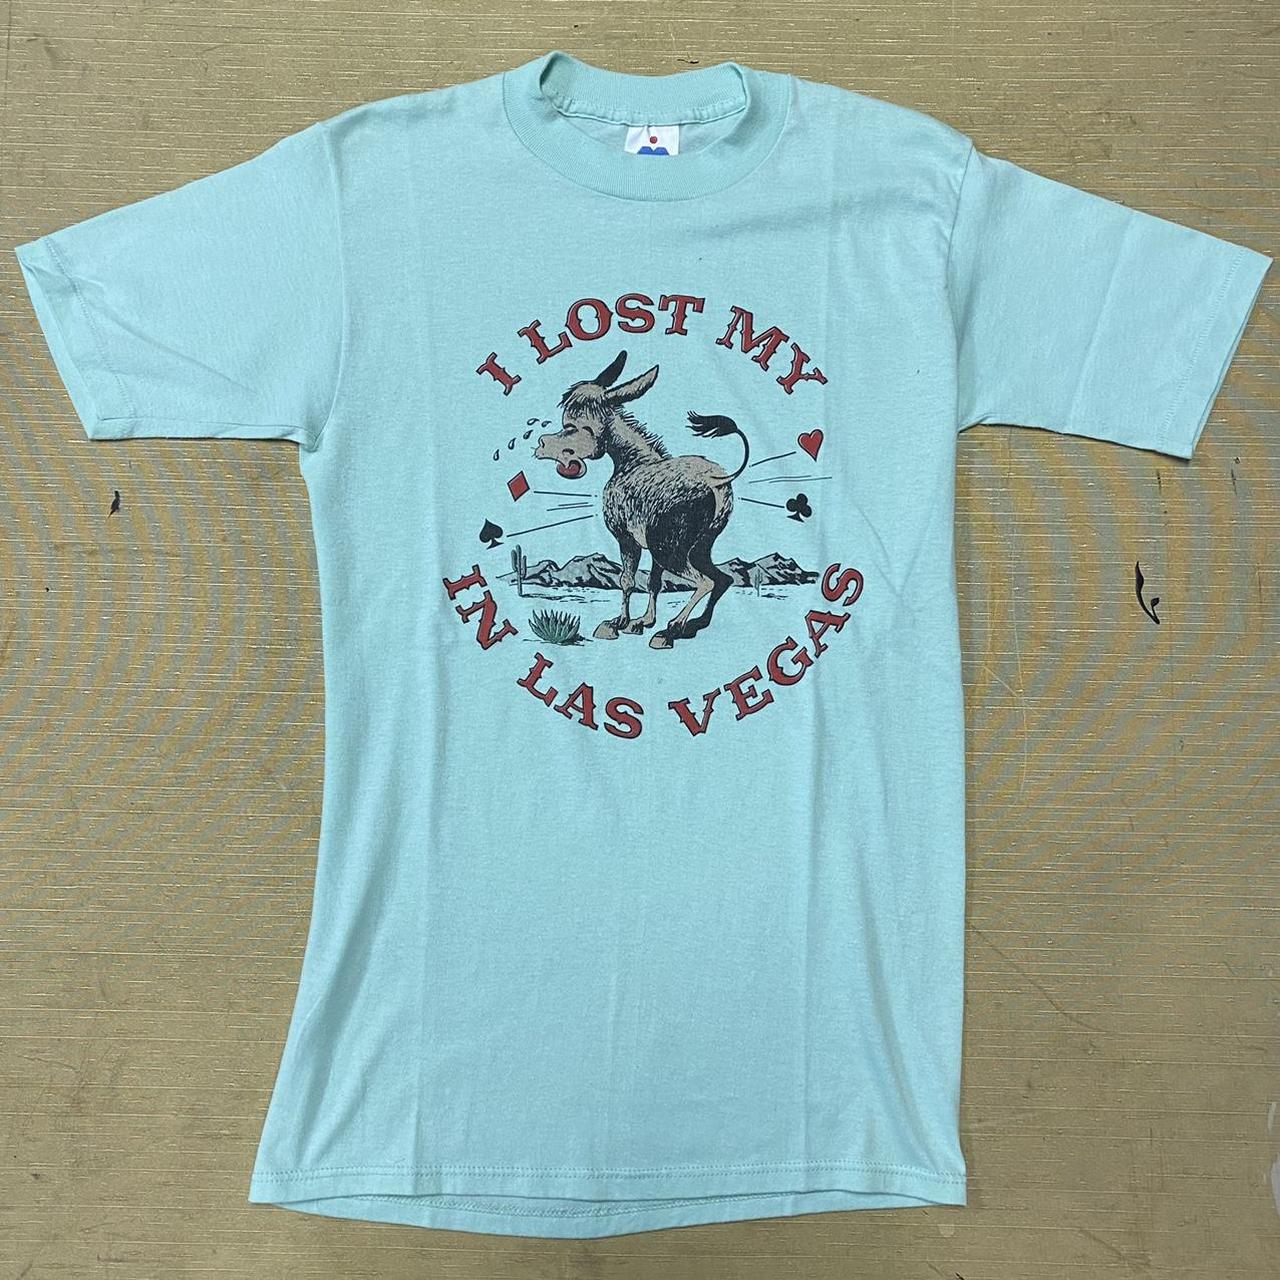 Louisiana Yard Dog t-shirt. Alligator capitol of the - Depop